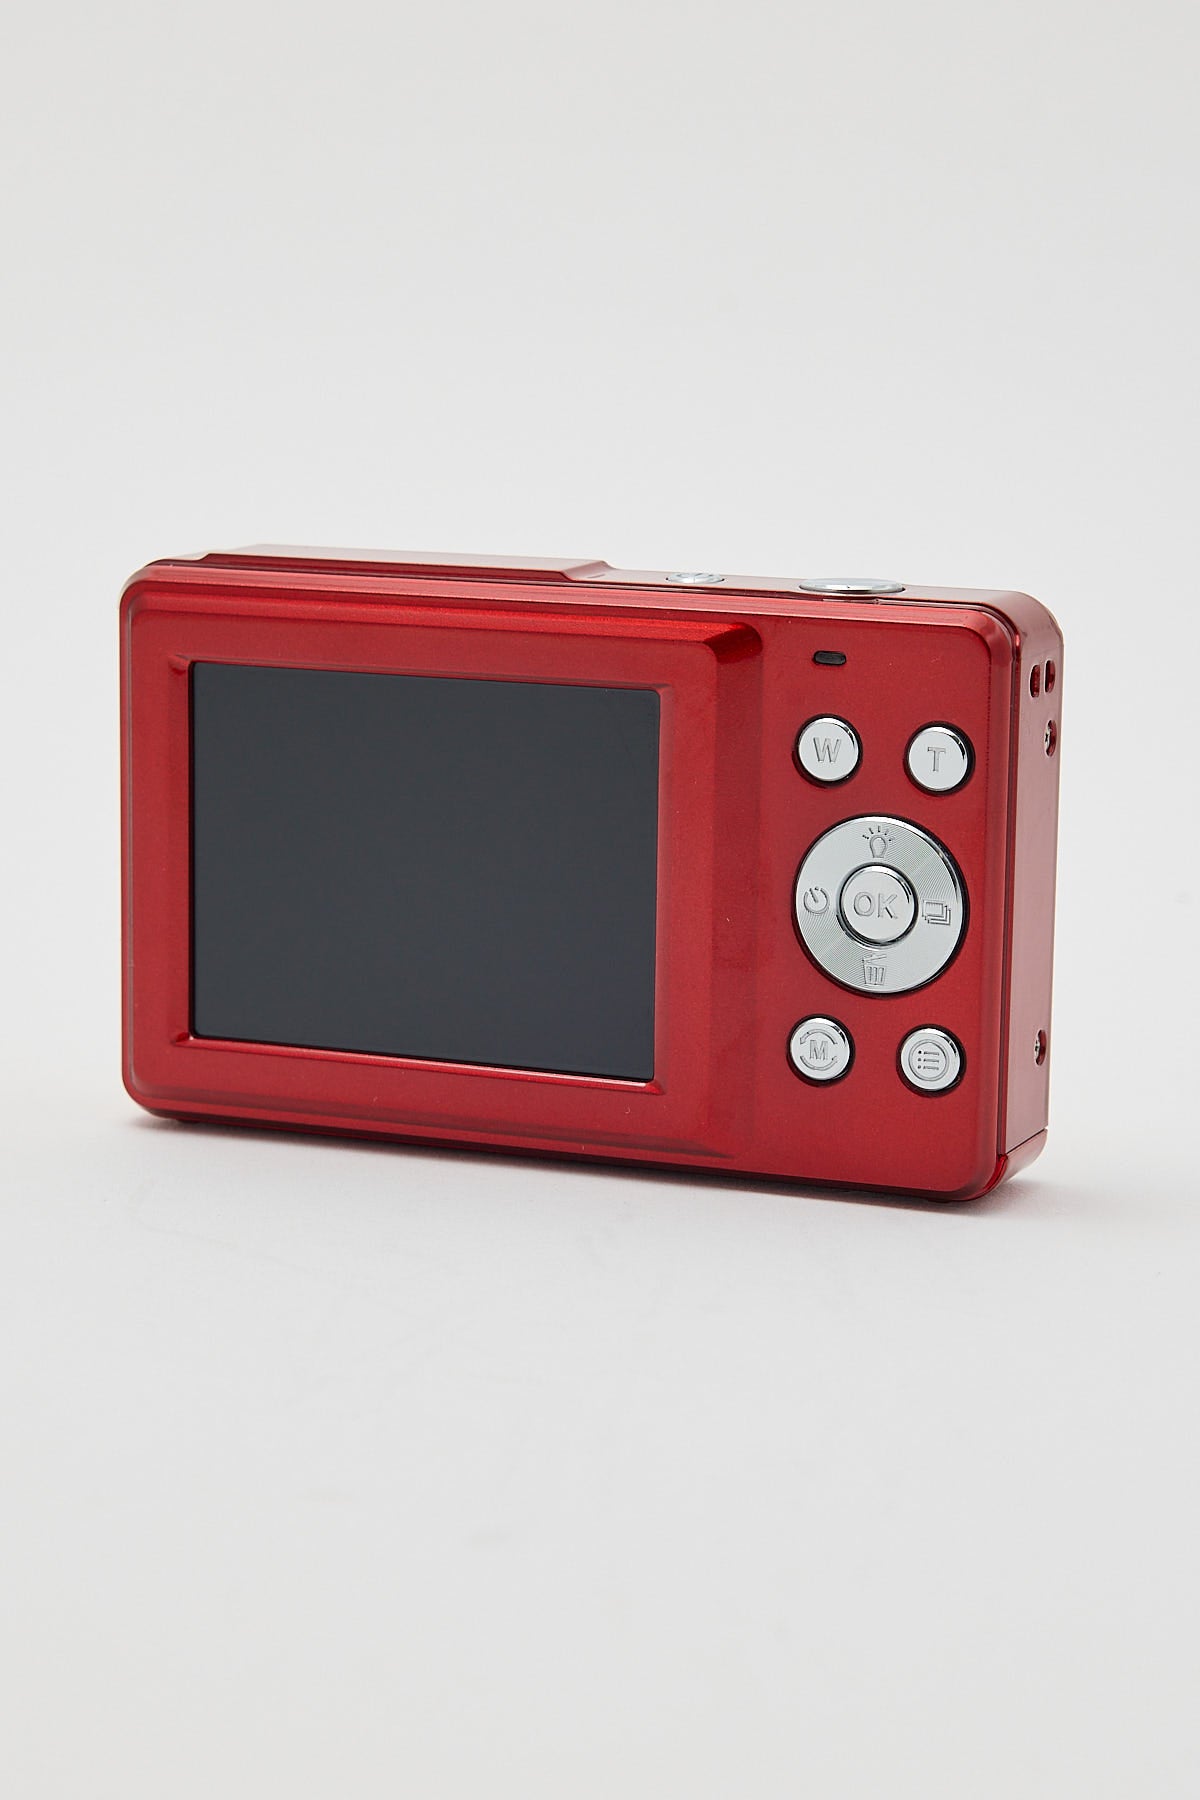 Ilford Pixi-D Compact Digital Camera Red